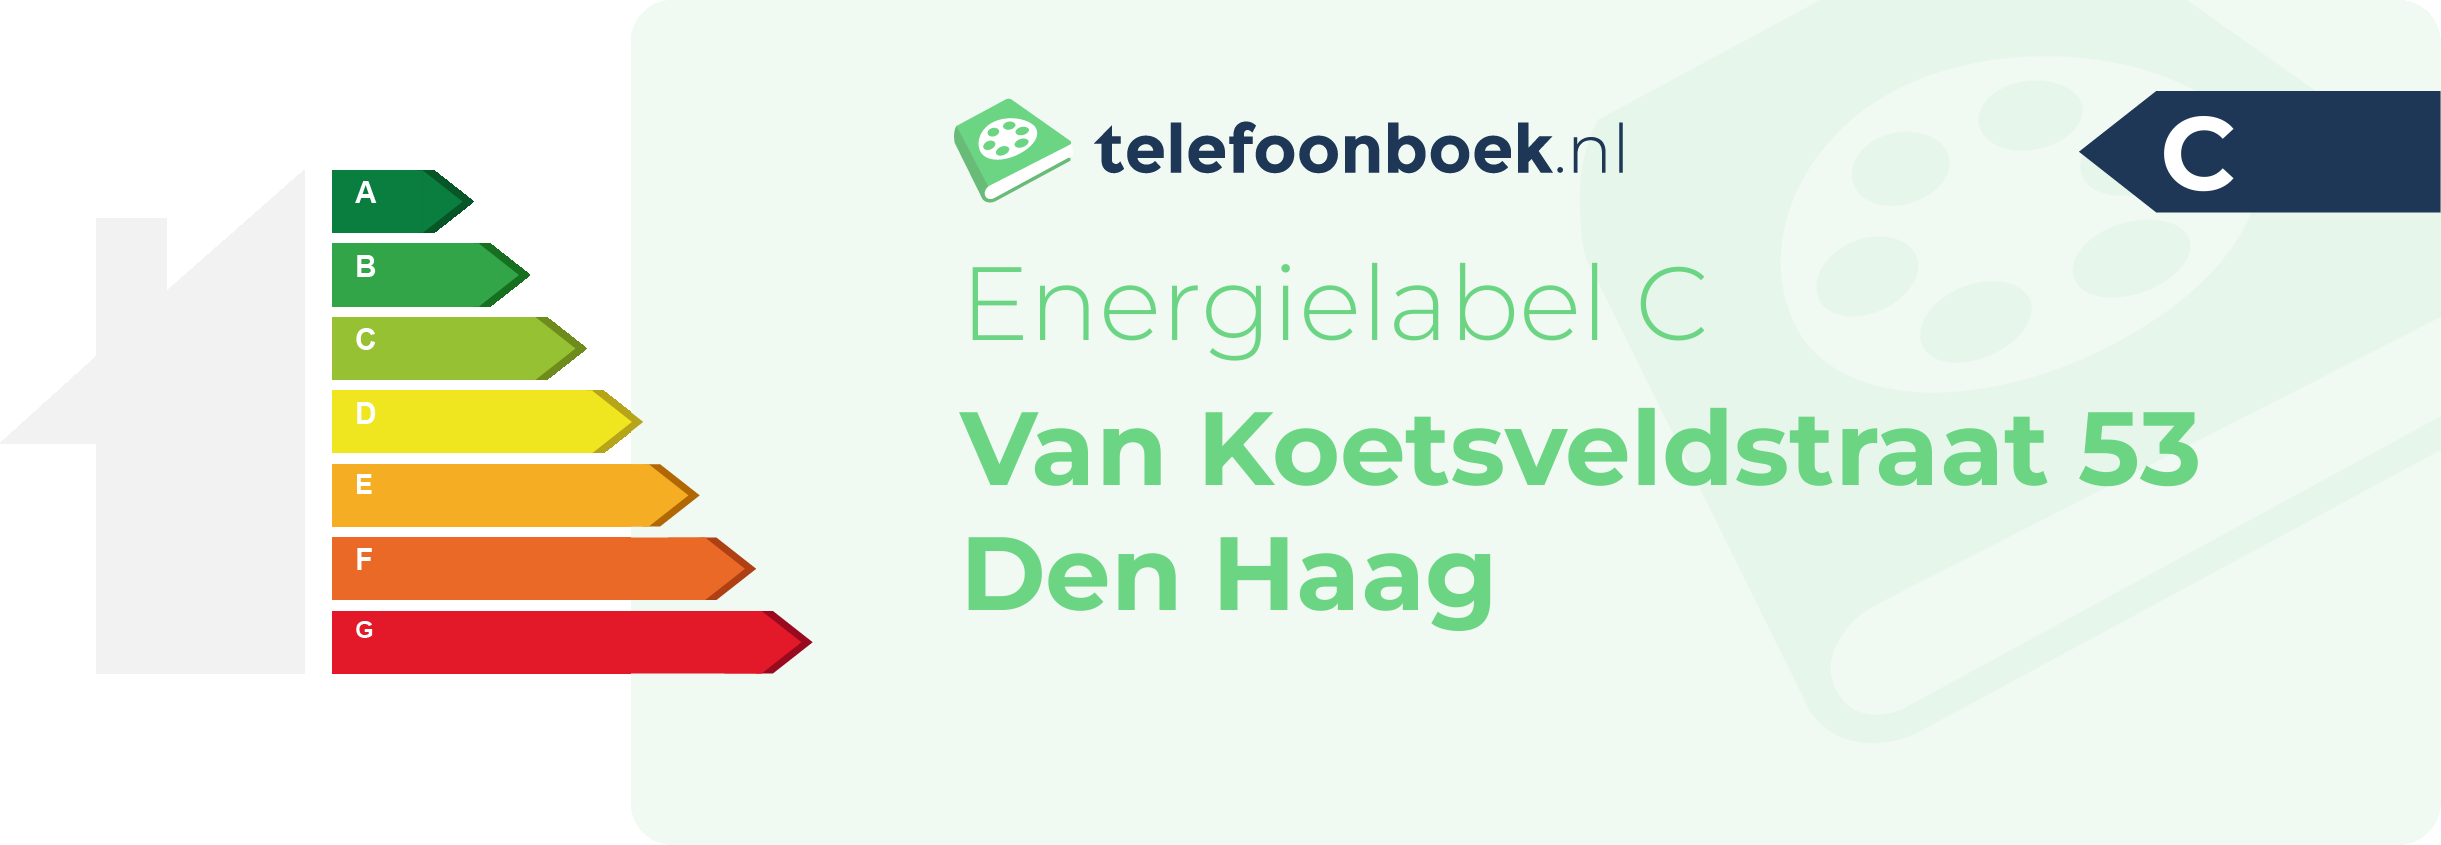 Energielabel Van Koetsveldstraat 53 Den Haag